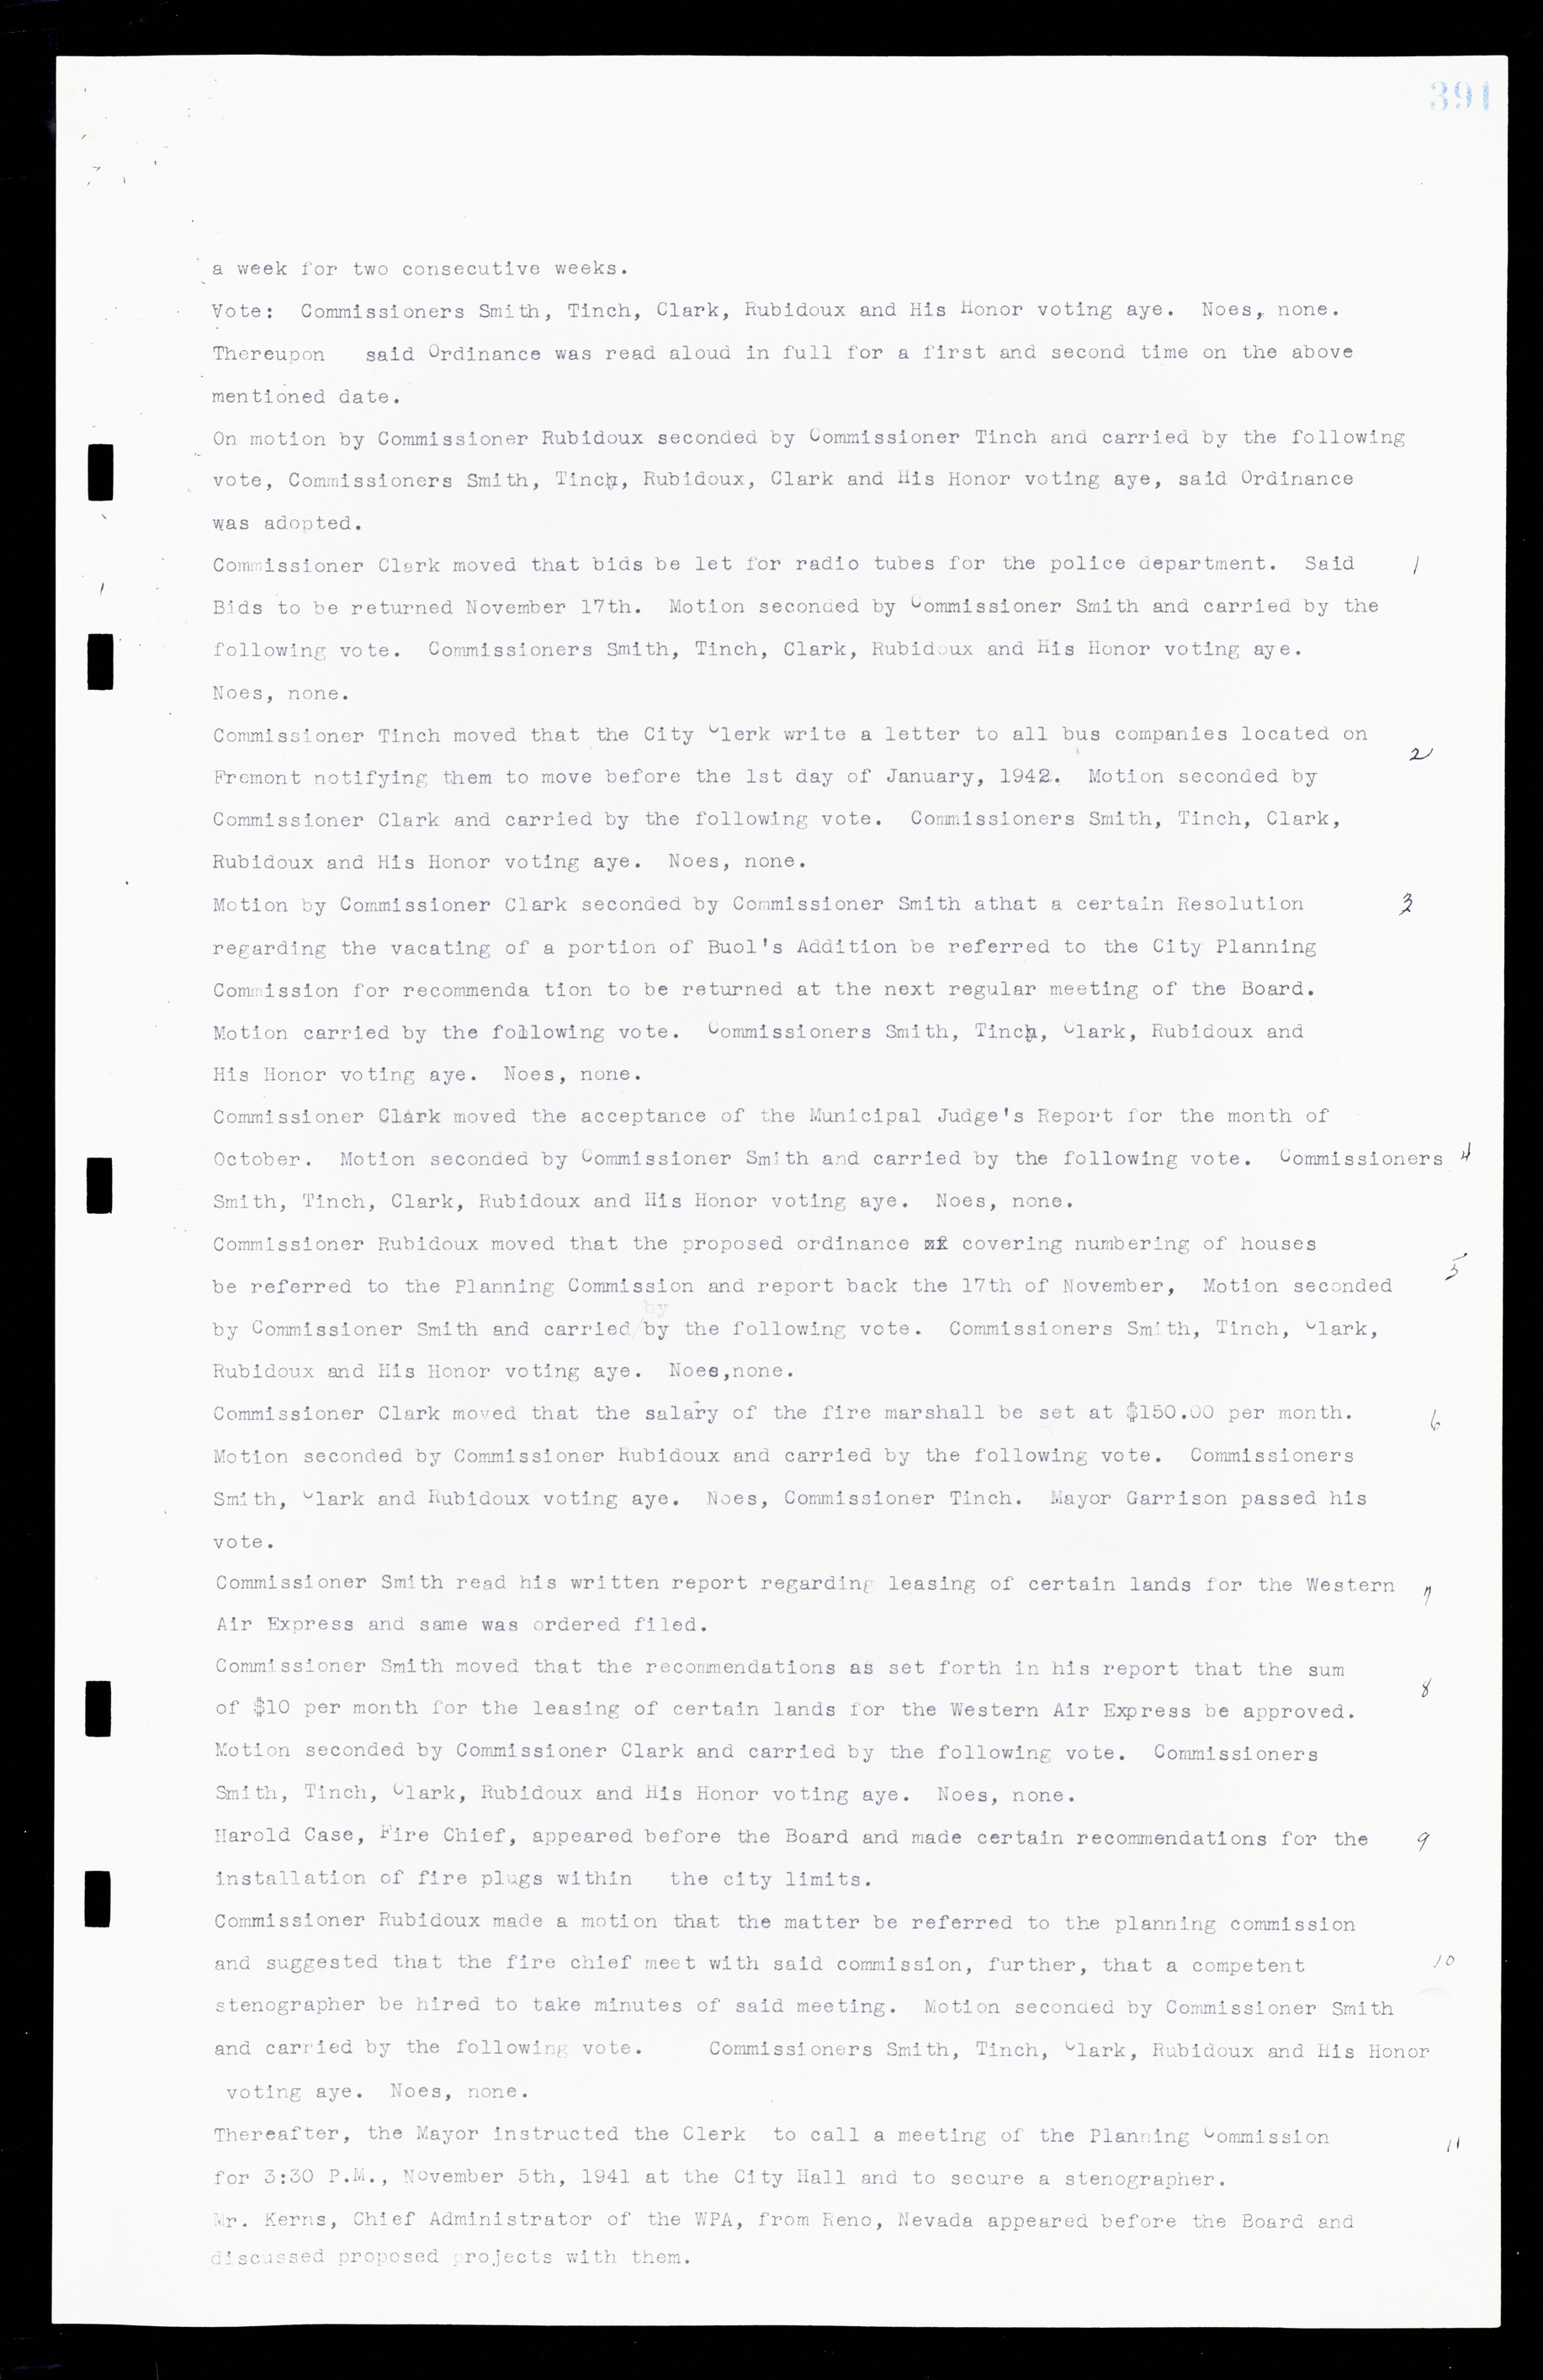 Las Vegas City Commission Minutes, February 17, 1937 to August 4, 1942, lvc000004-417